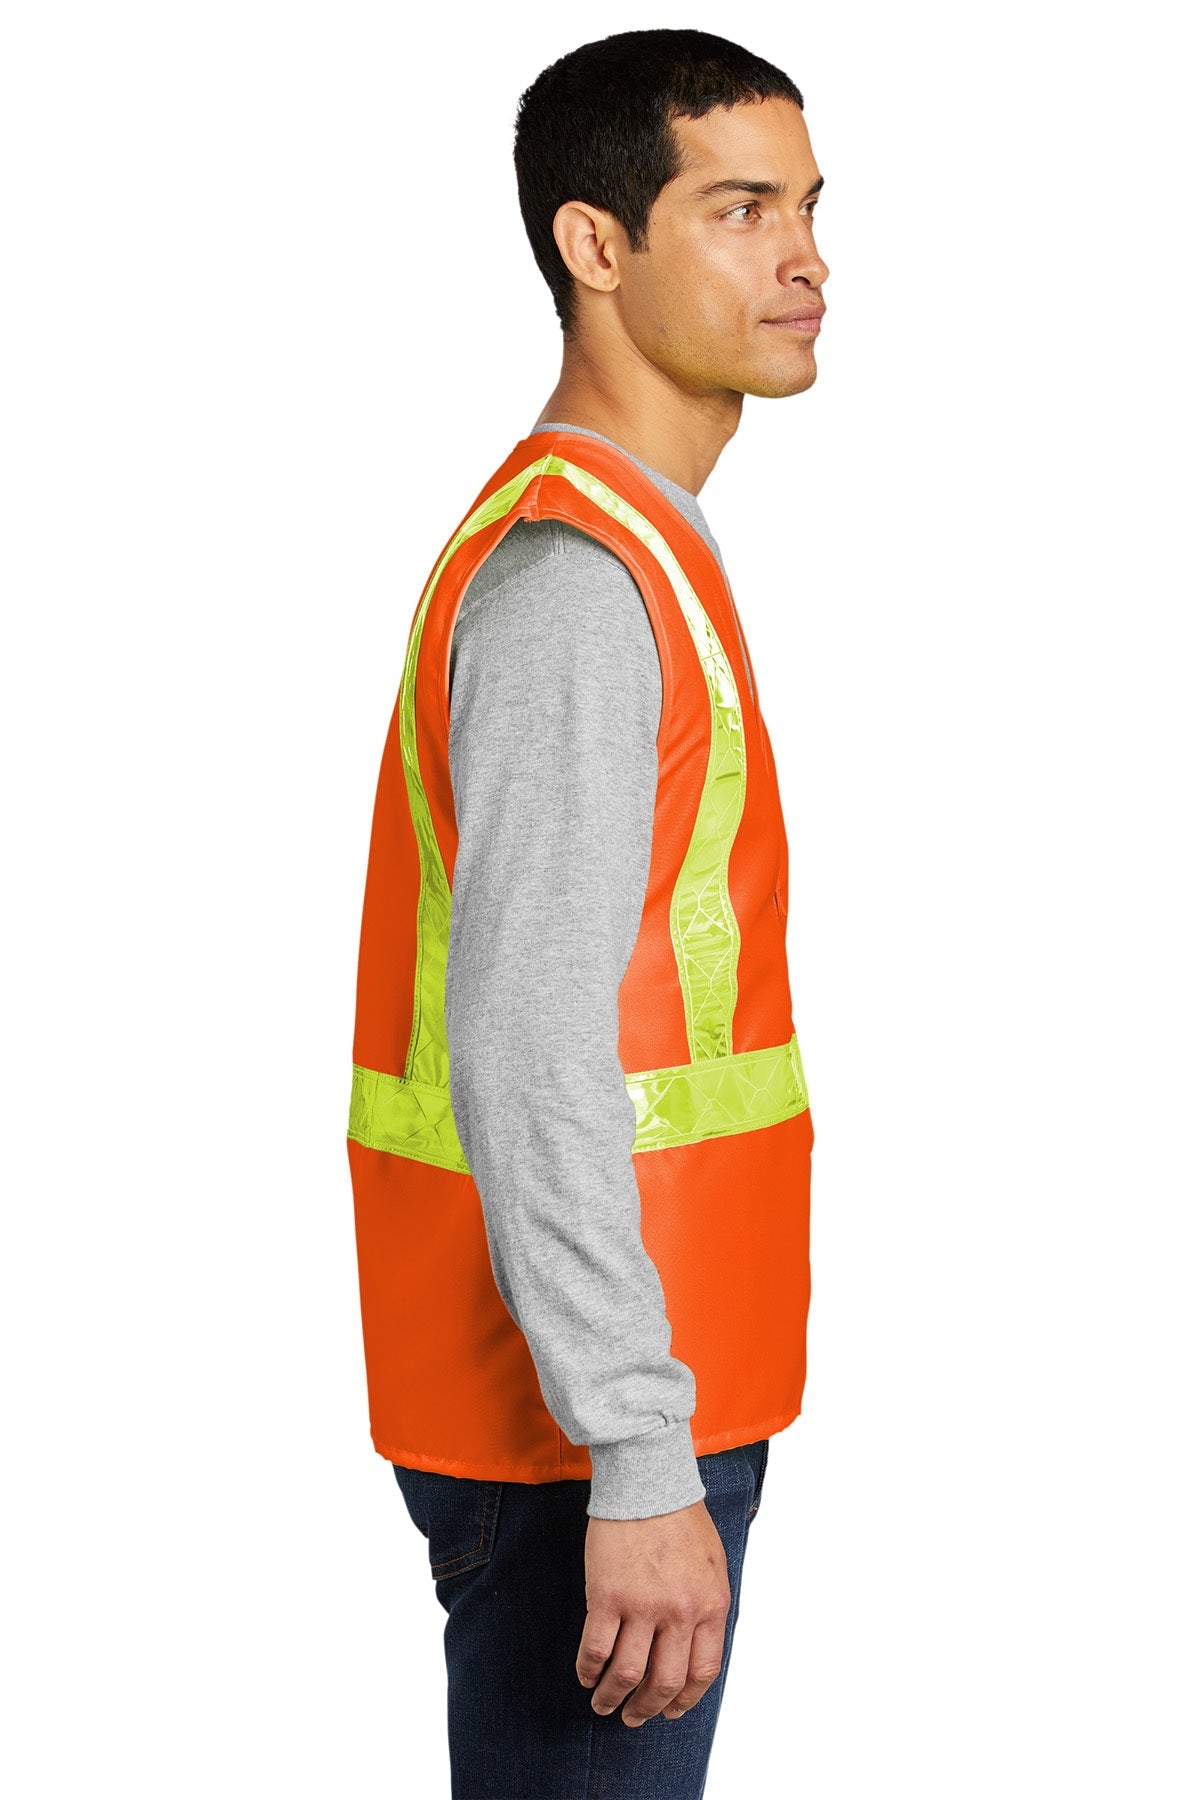 Port Authority Enhanced Visibility Branded Vests, Safety Orange/ Reflective